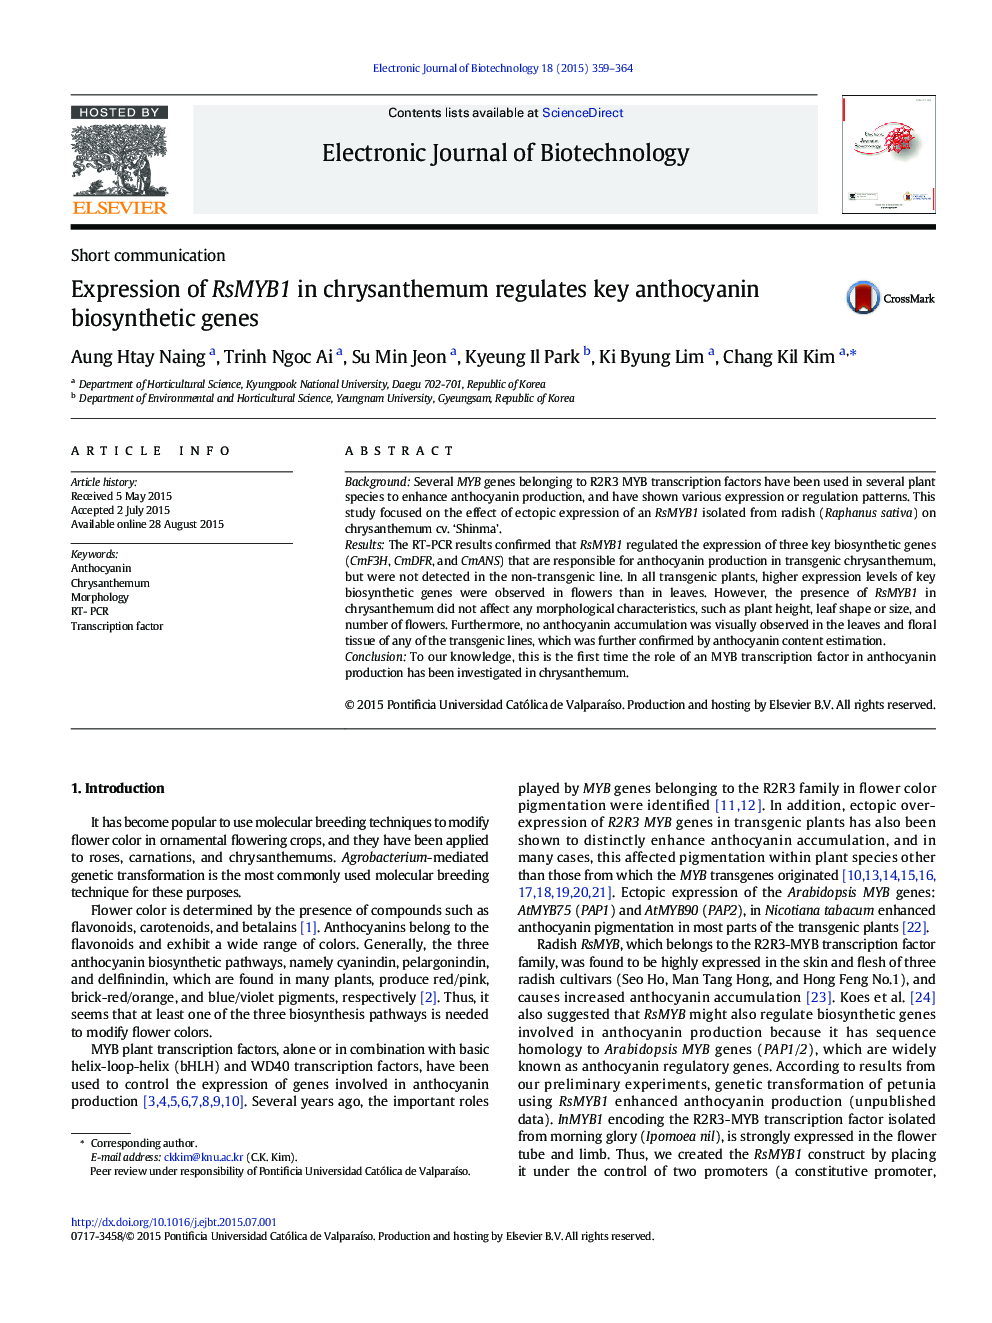 Expression of RsMYB1 in chrysanthemum regulates key anthocyanin biosynthetic genes 